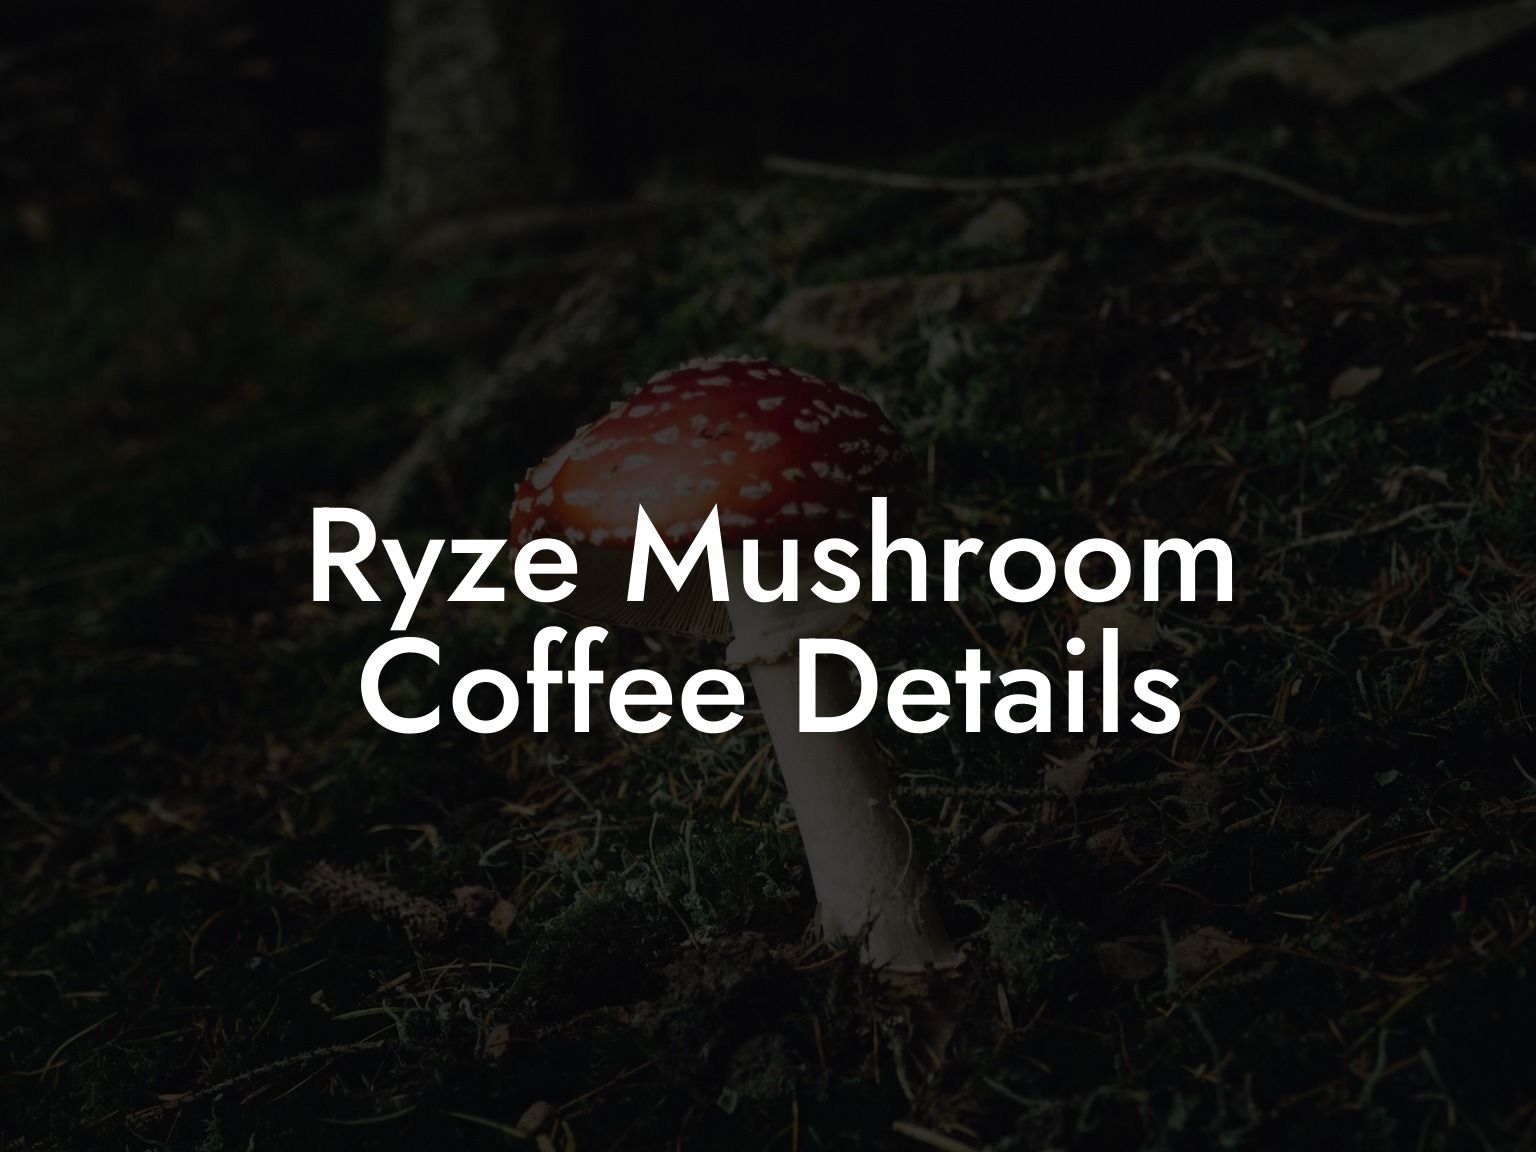 Ryze Mushroom Coffee Details